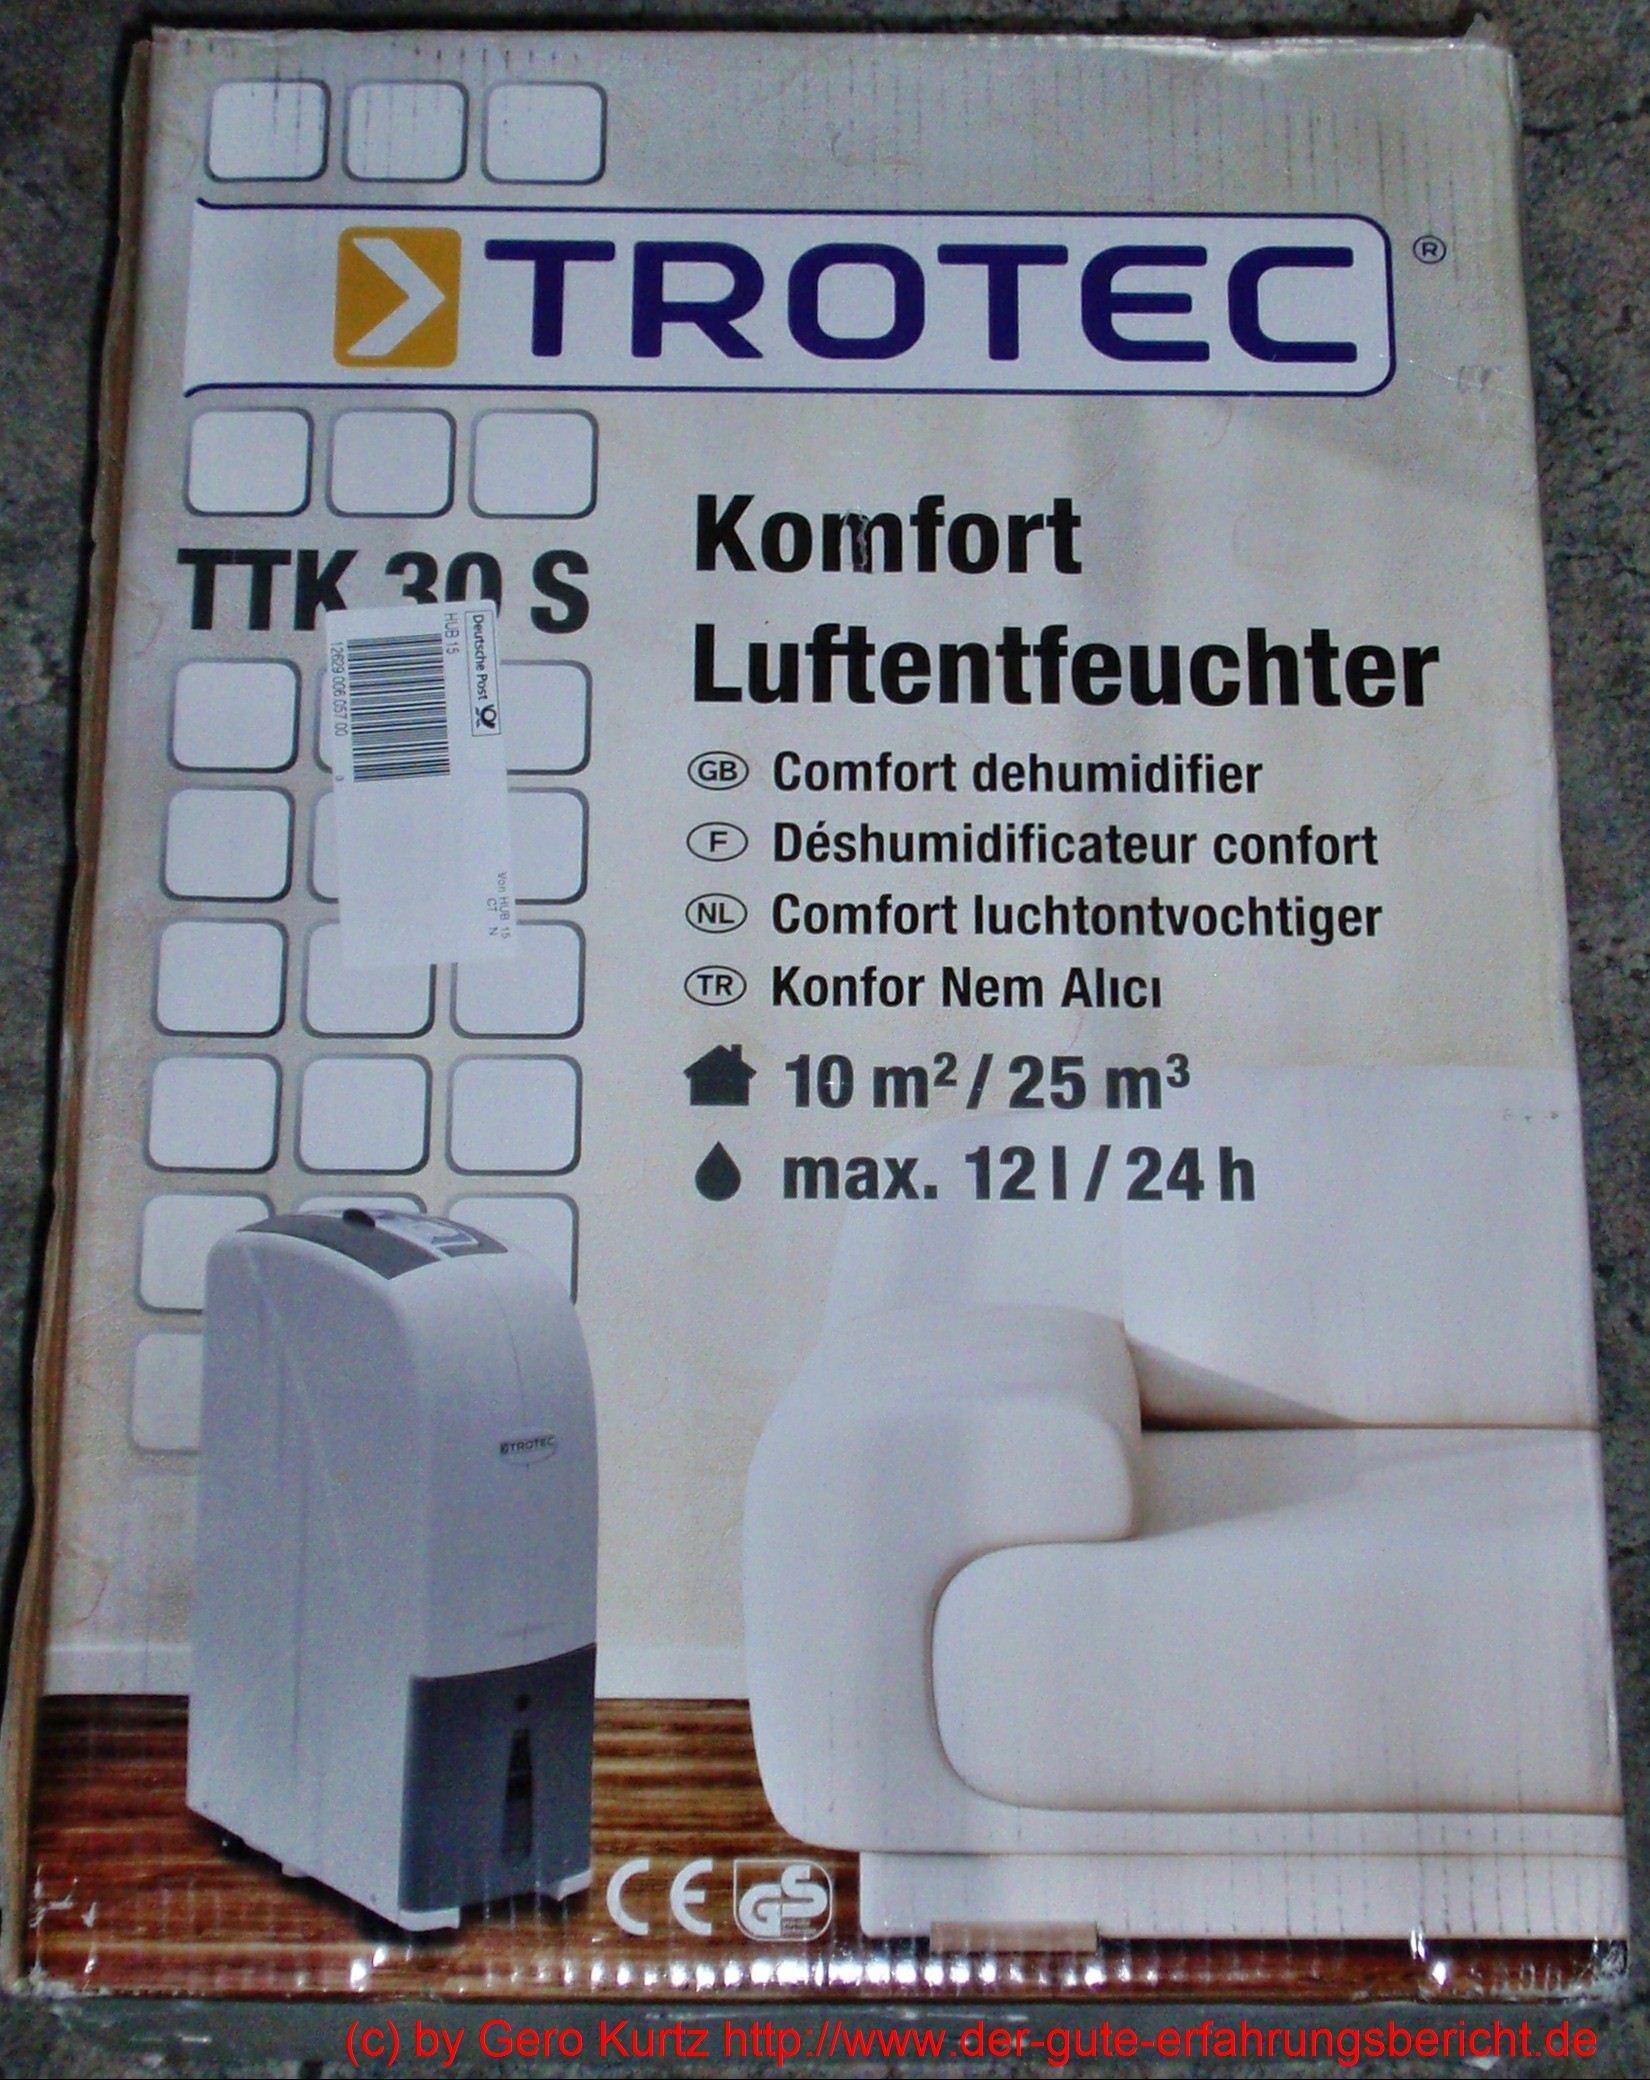 TROTEC Kondensationstrockner TTK 30 S - Verpackung Rückseite